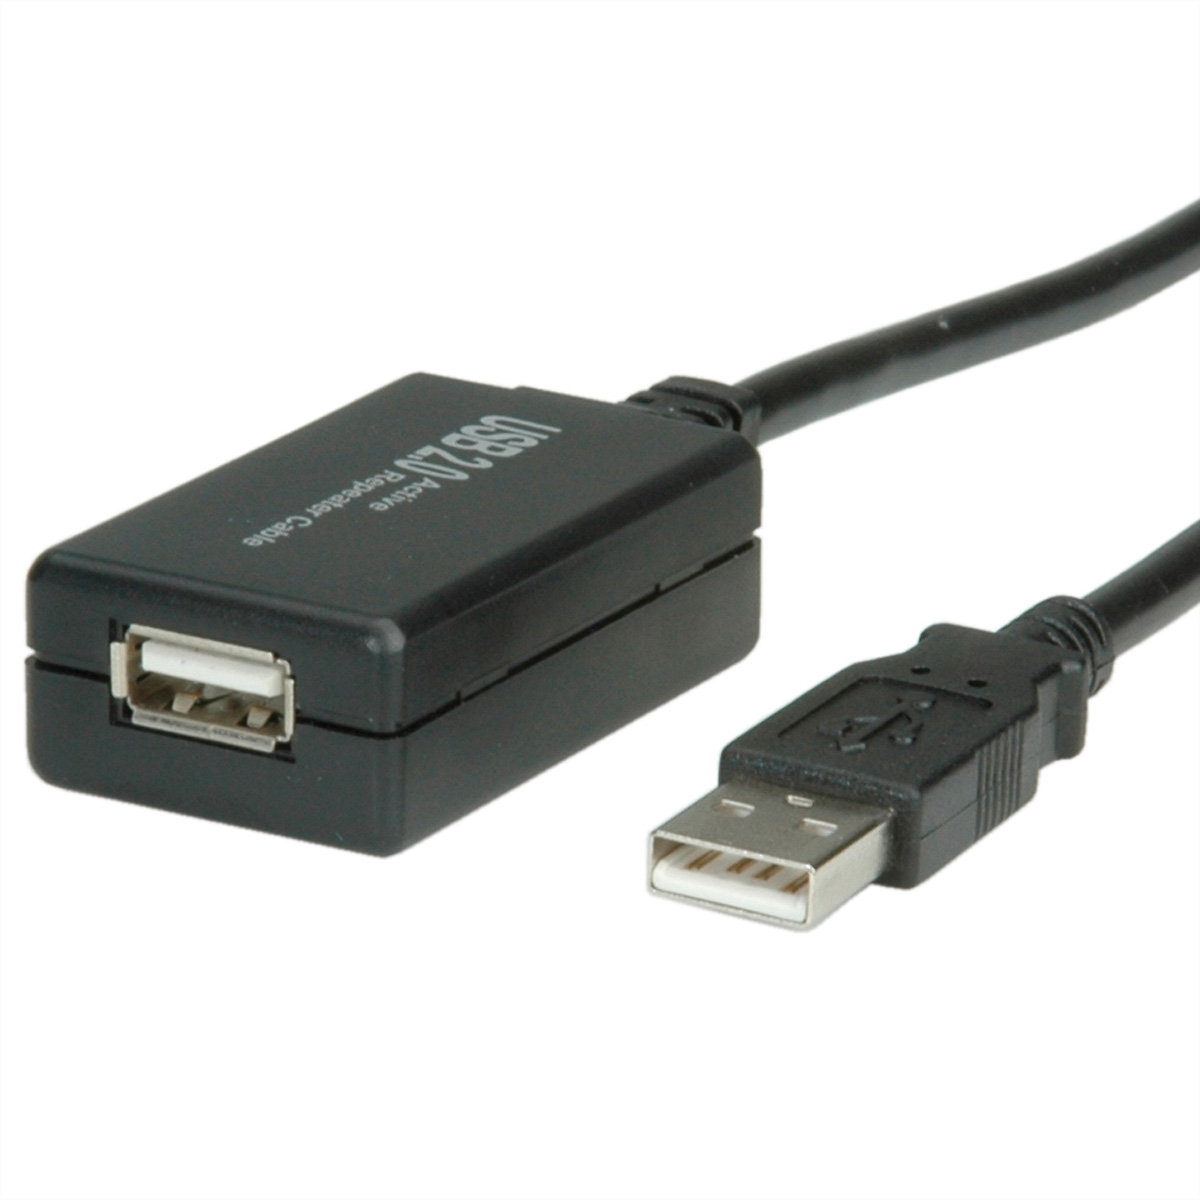 VALUE USB 2.0 Verl?ngerung, aktiv, mit Repeater, schwarz, 12 m